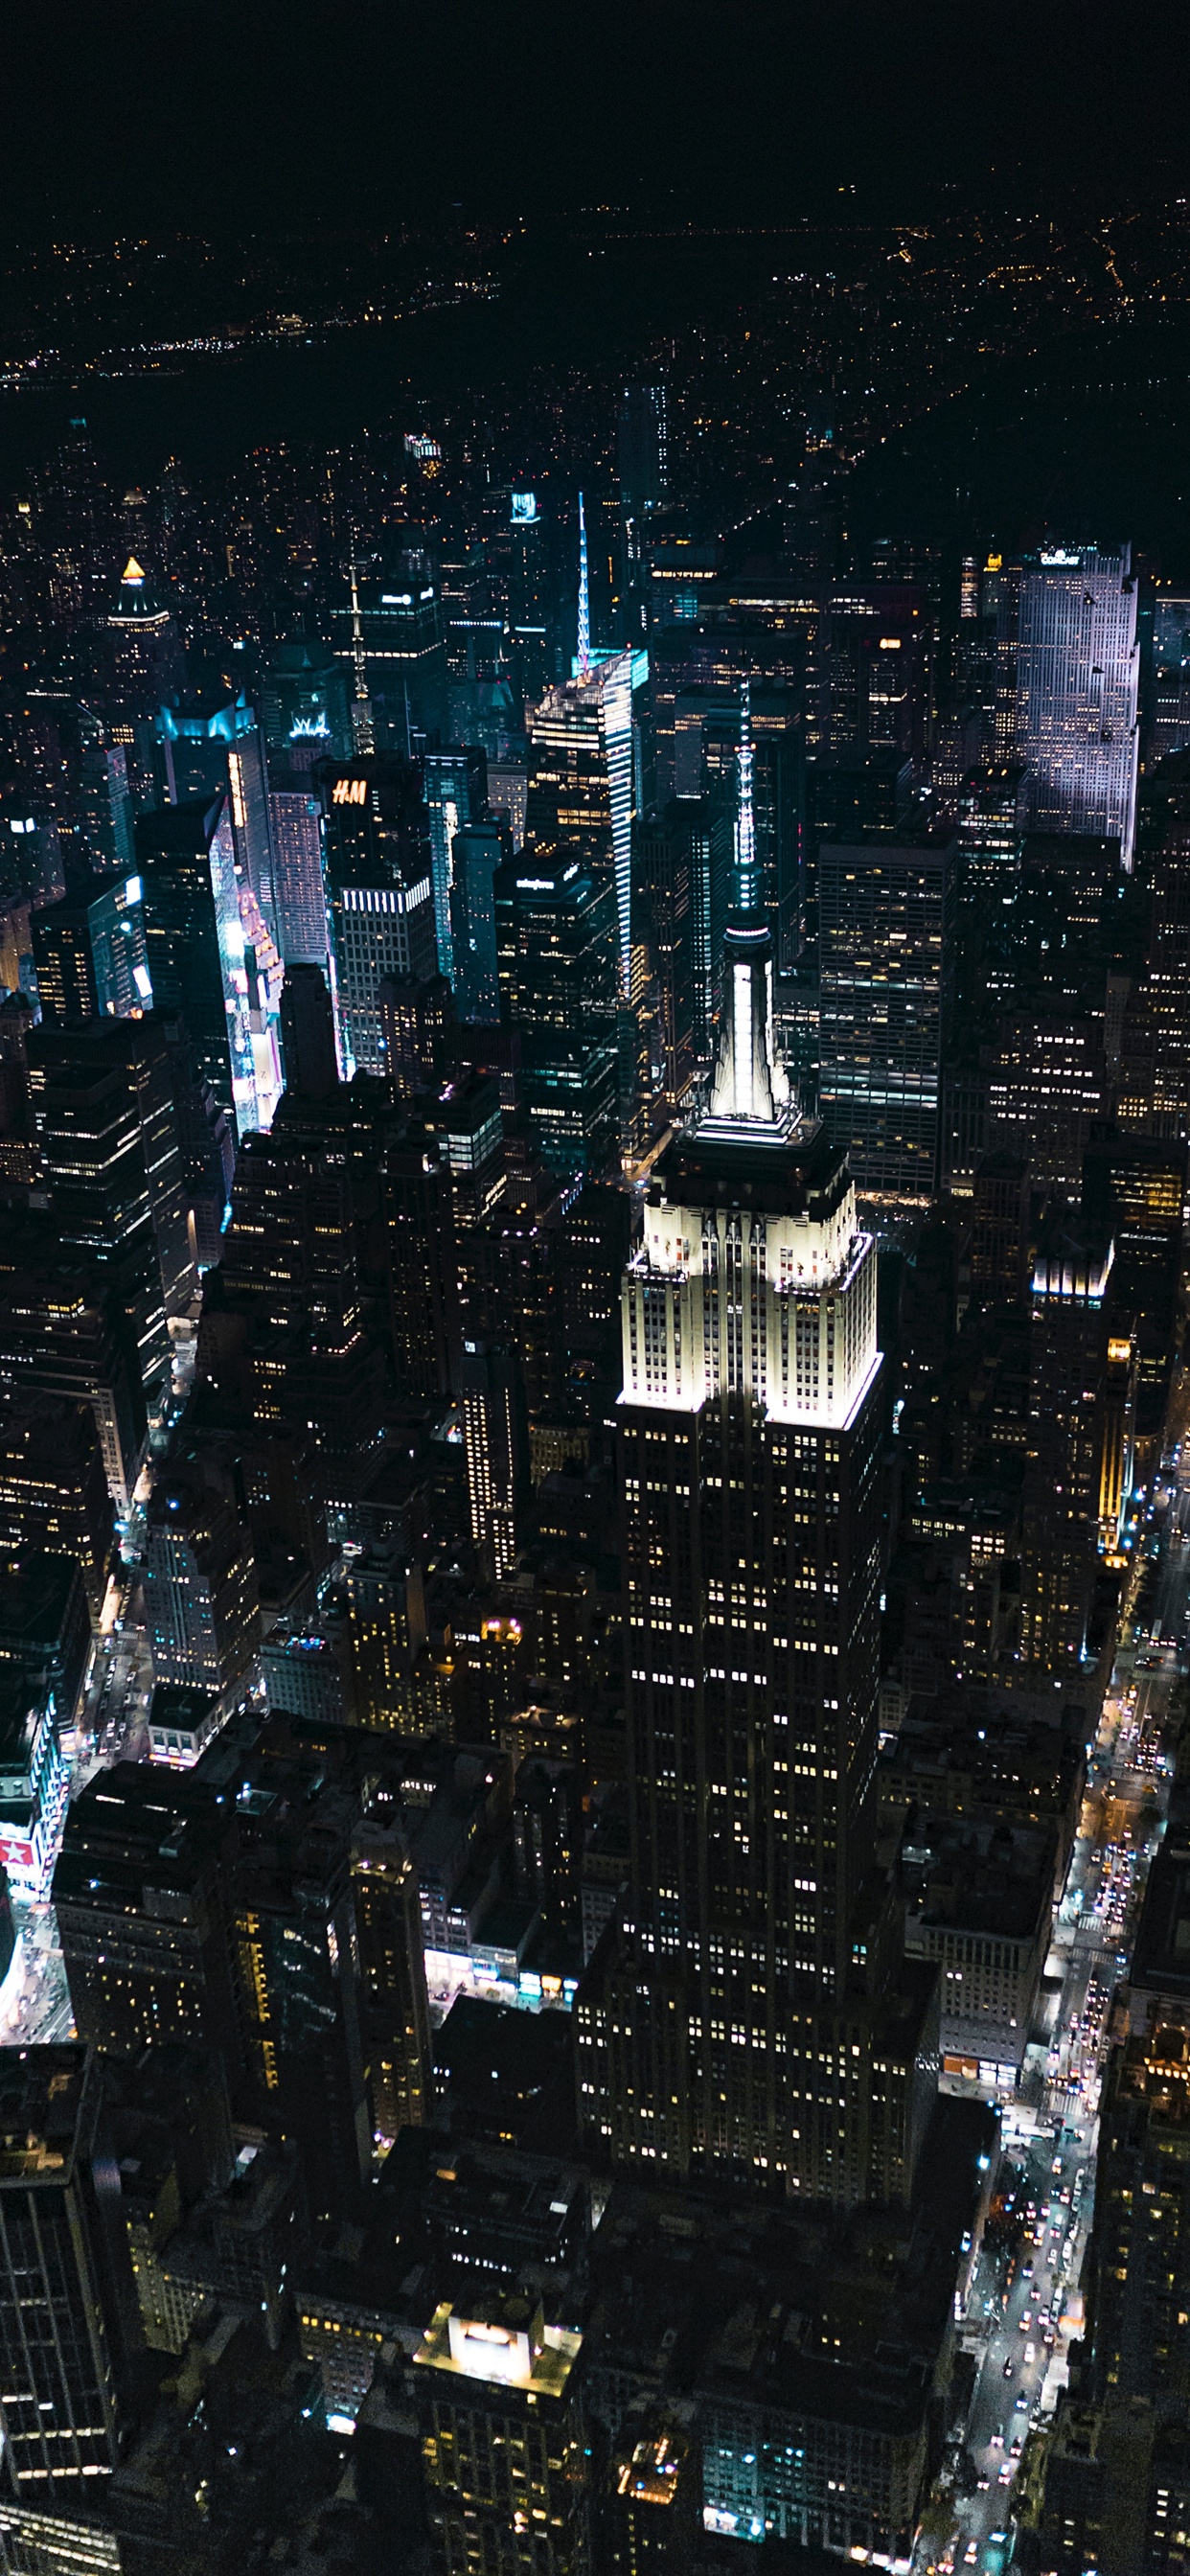 City night, skyscrapers, lights, street iPhone XS Max, X 3GS wallpaper download